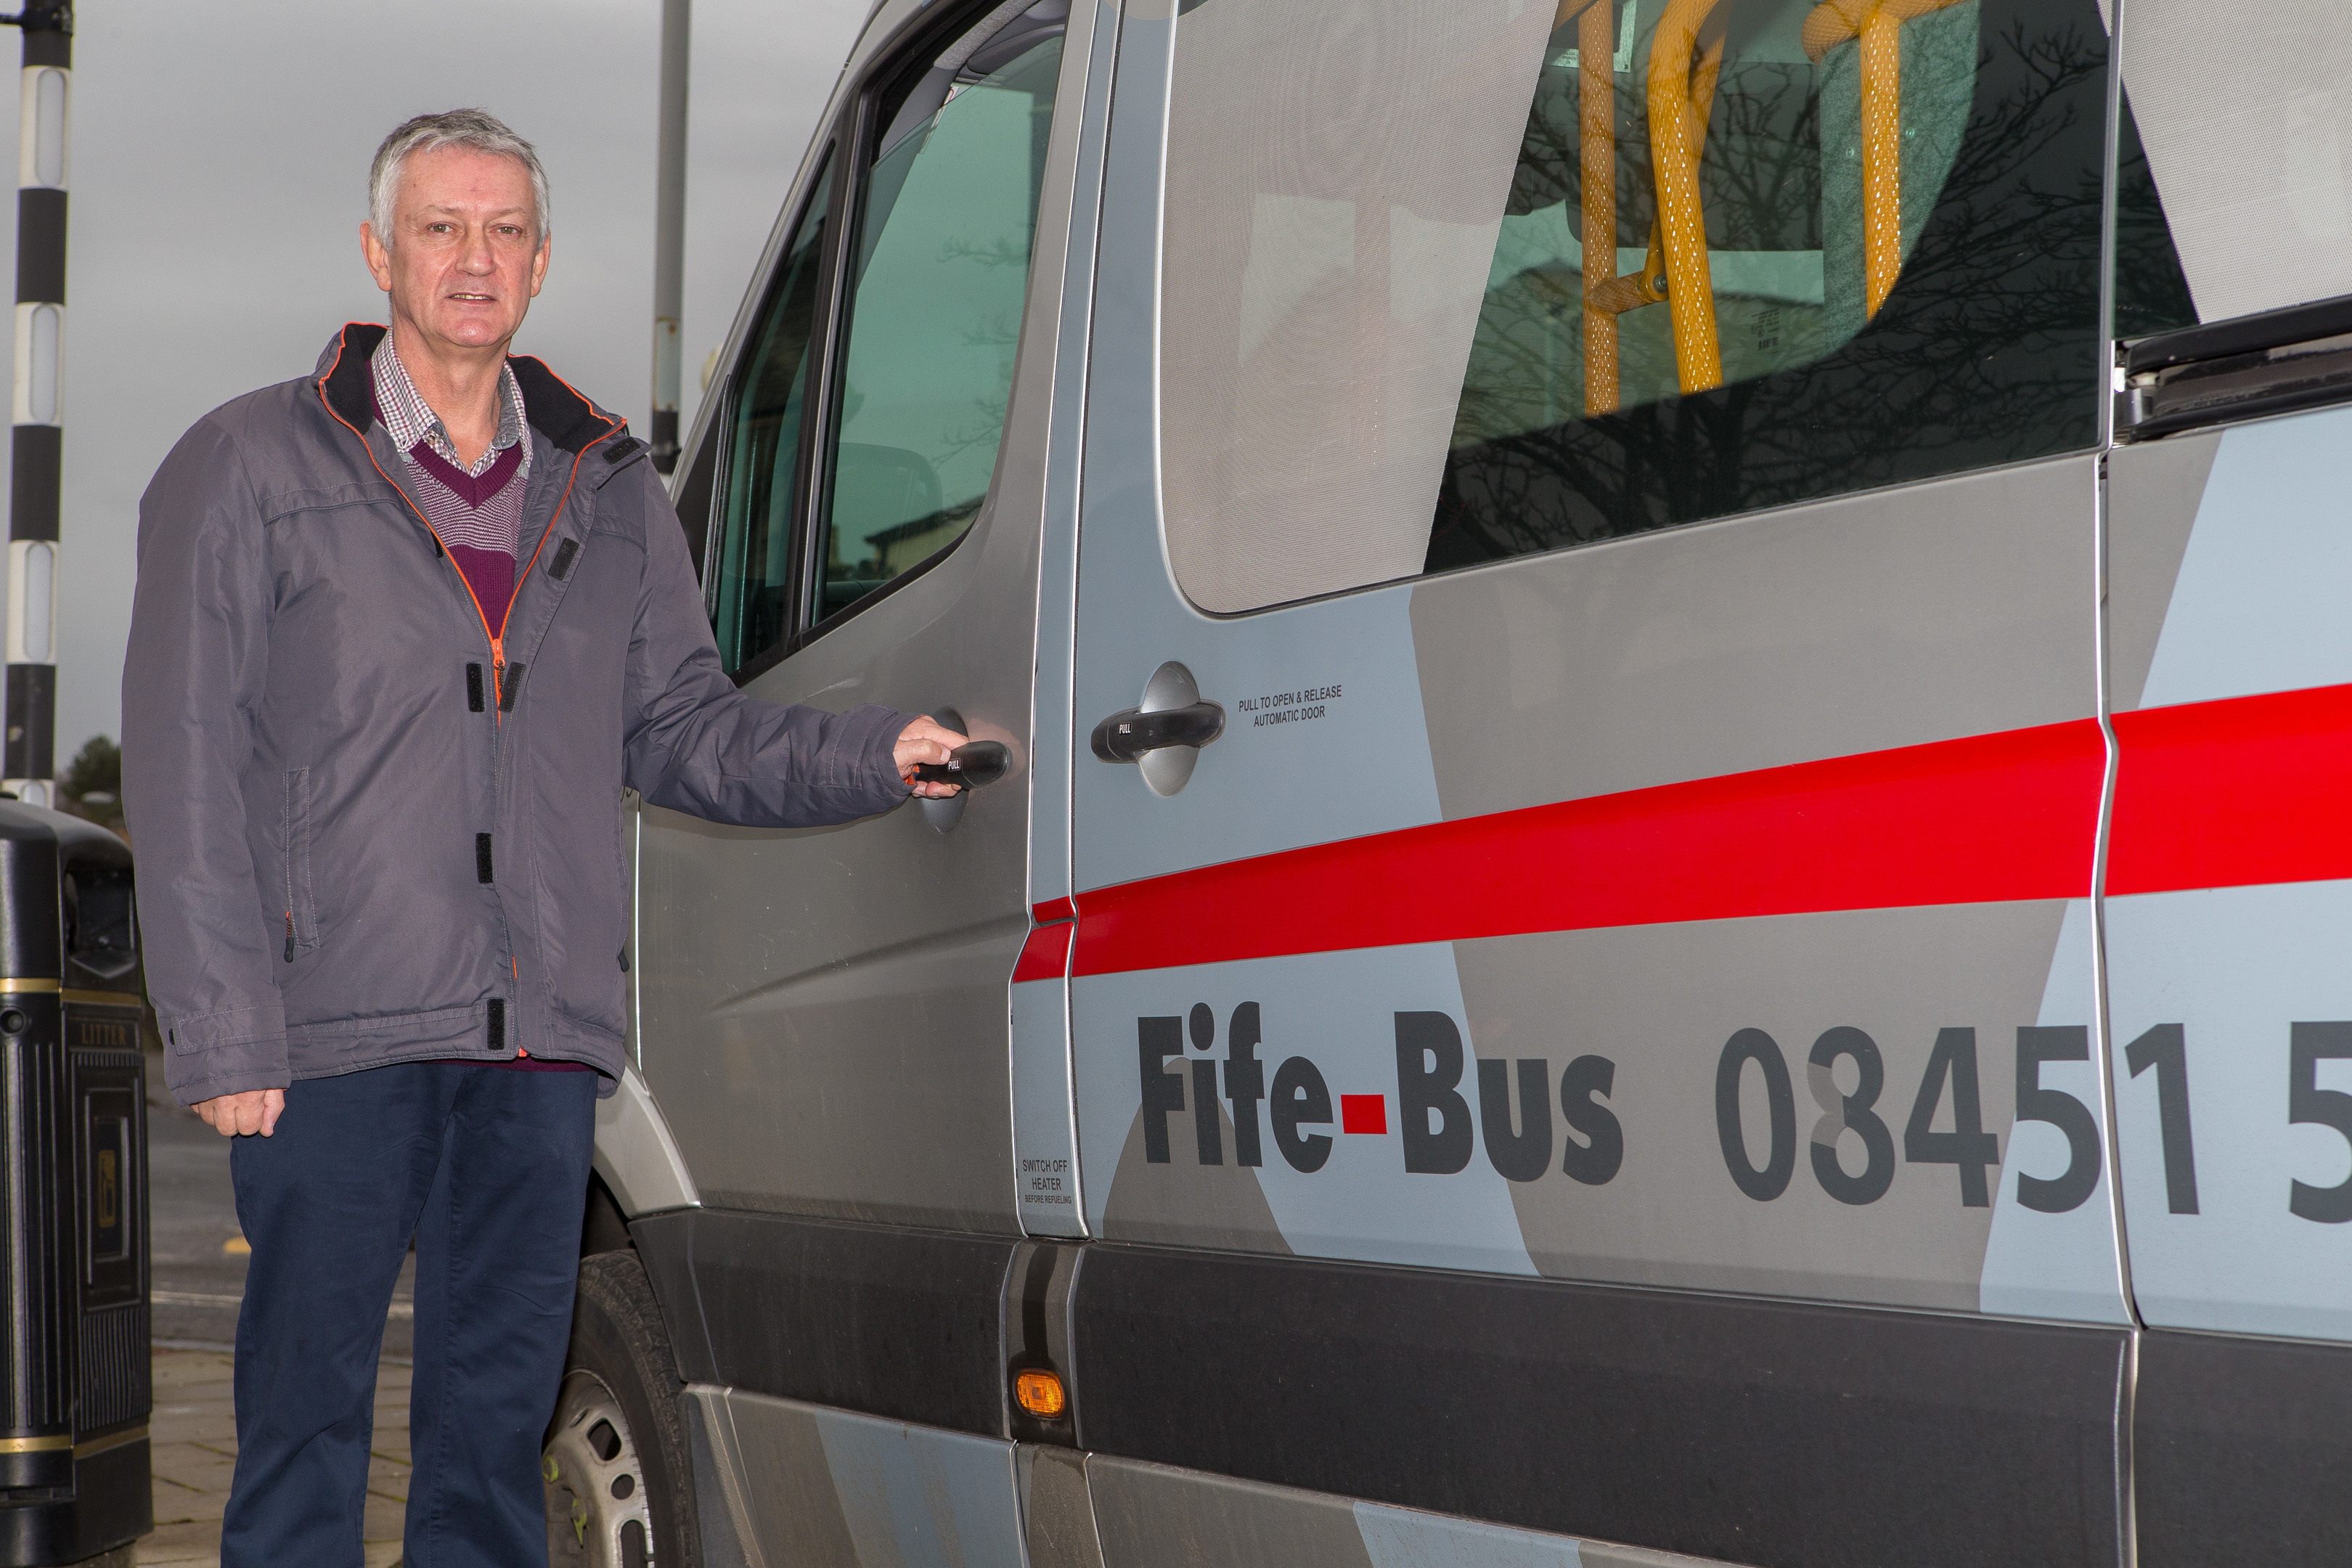 Councillor Tom Adams at the Fife Bus service